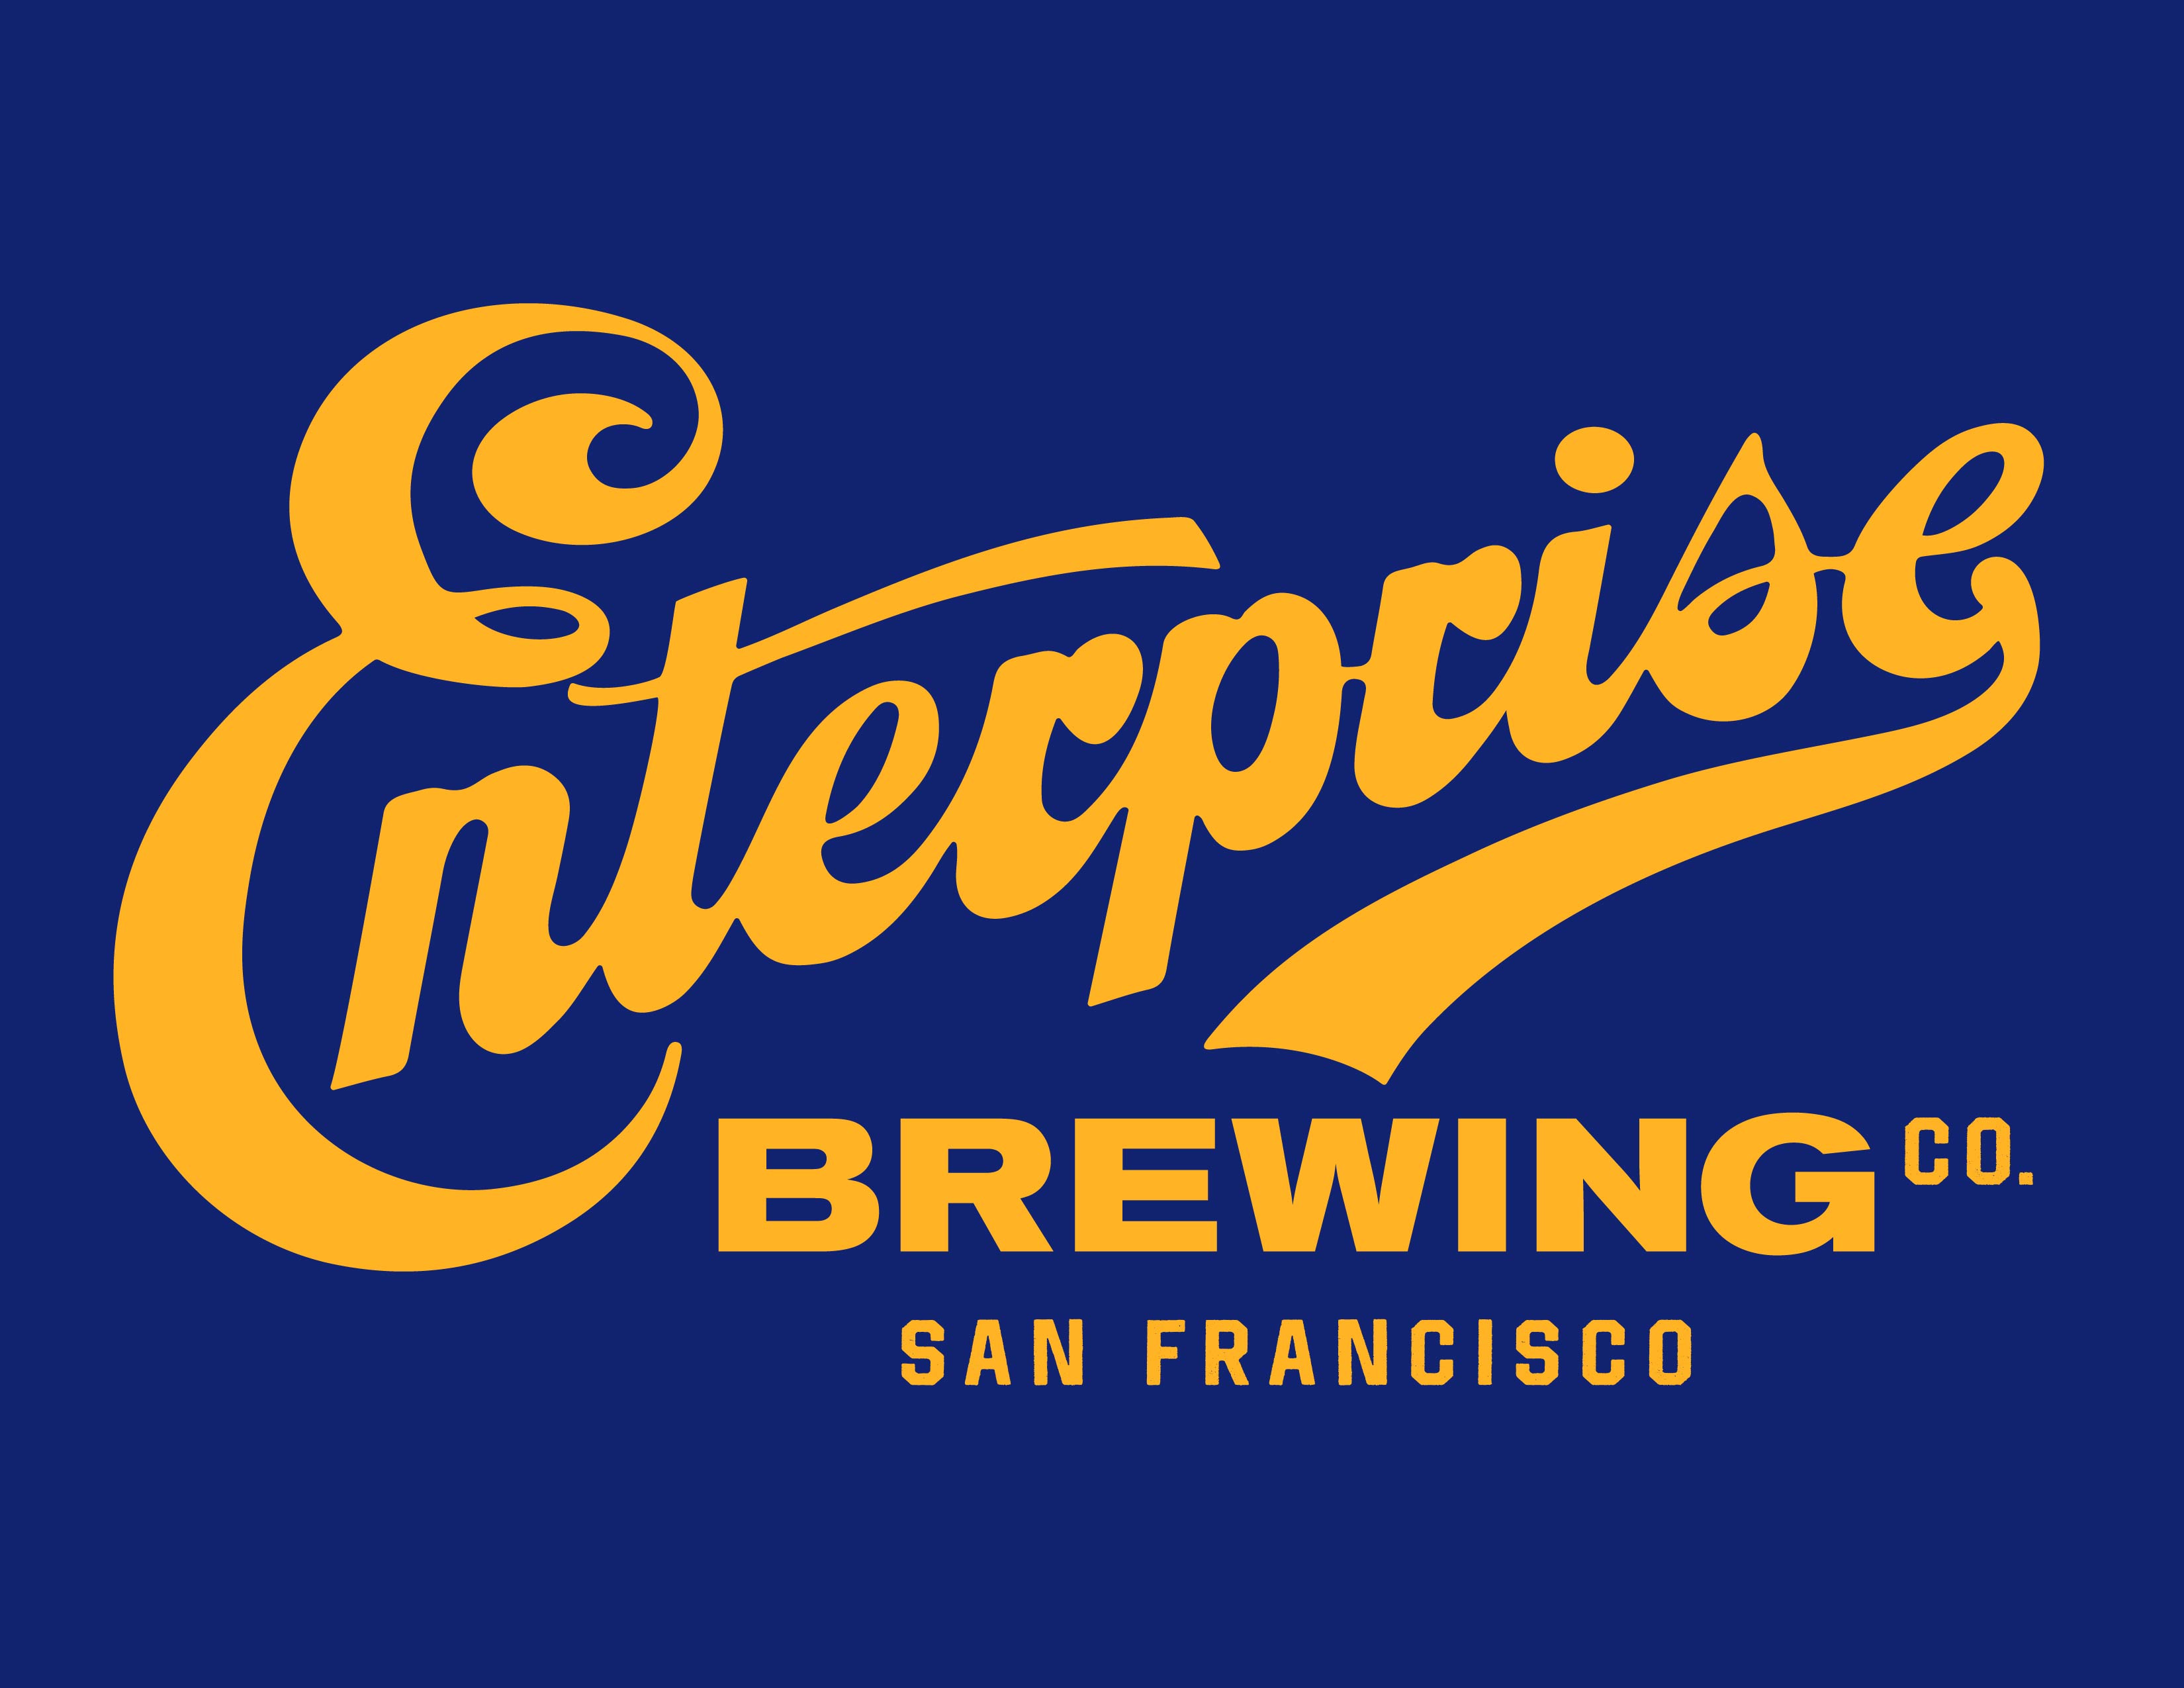 Enterprise Brewing Company